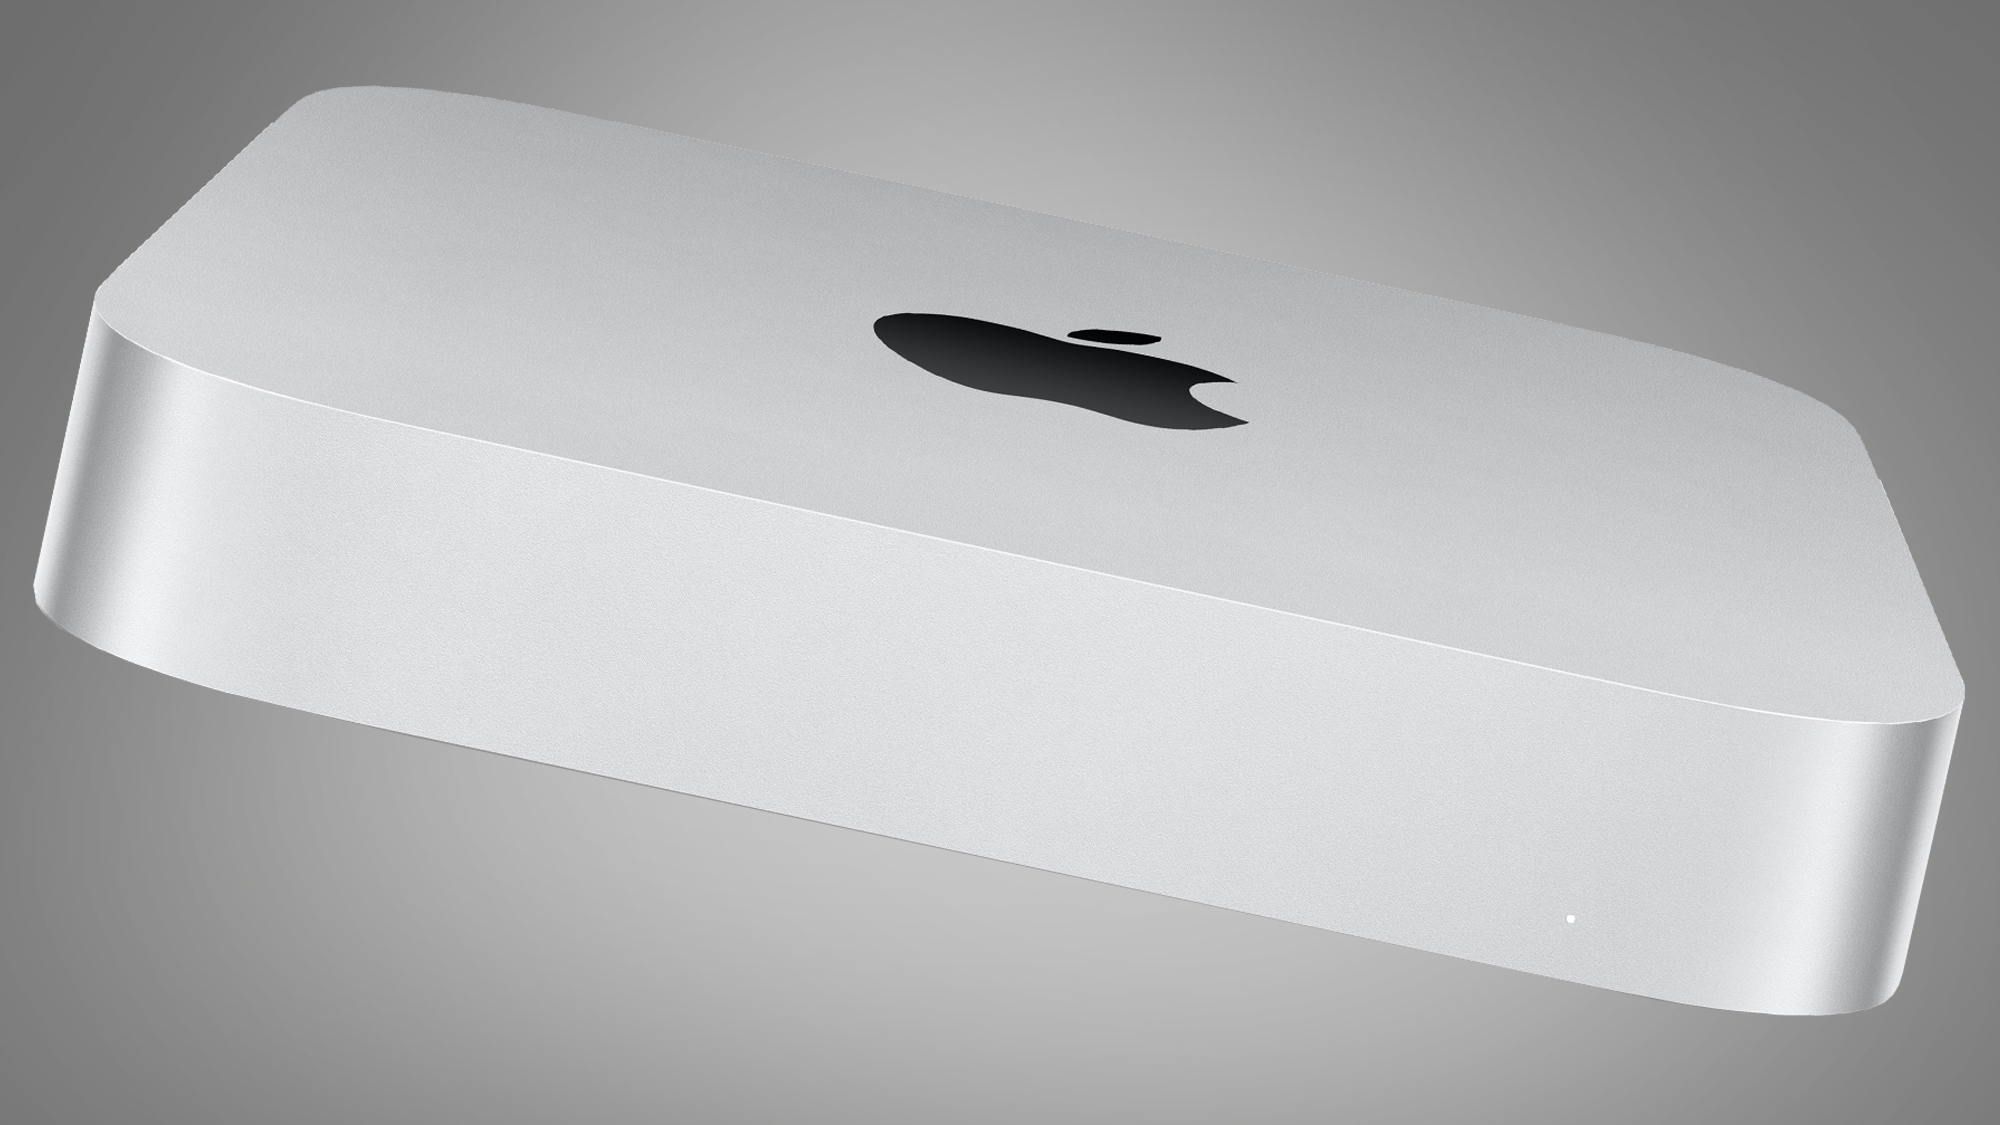 The Apple Mac Mini M2 on a gray background